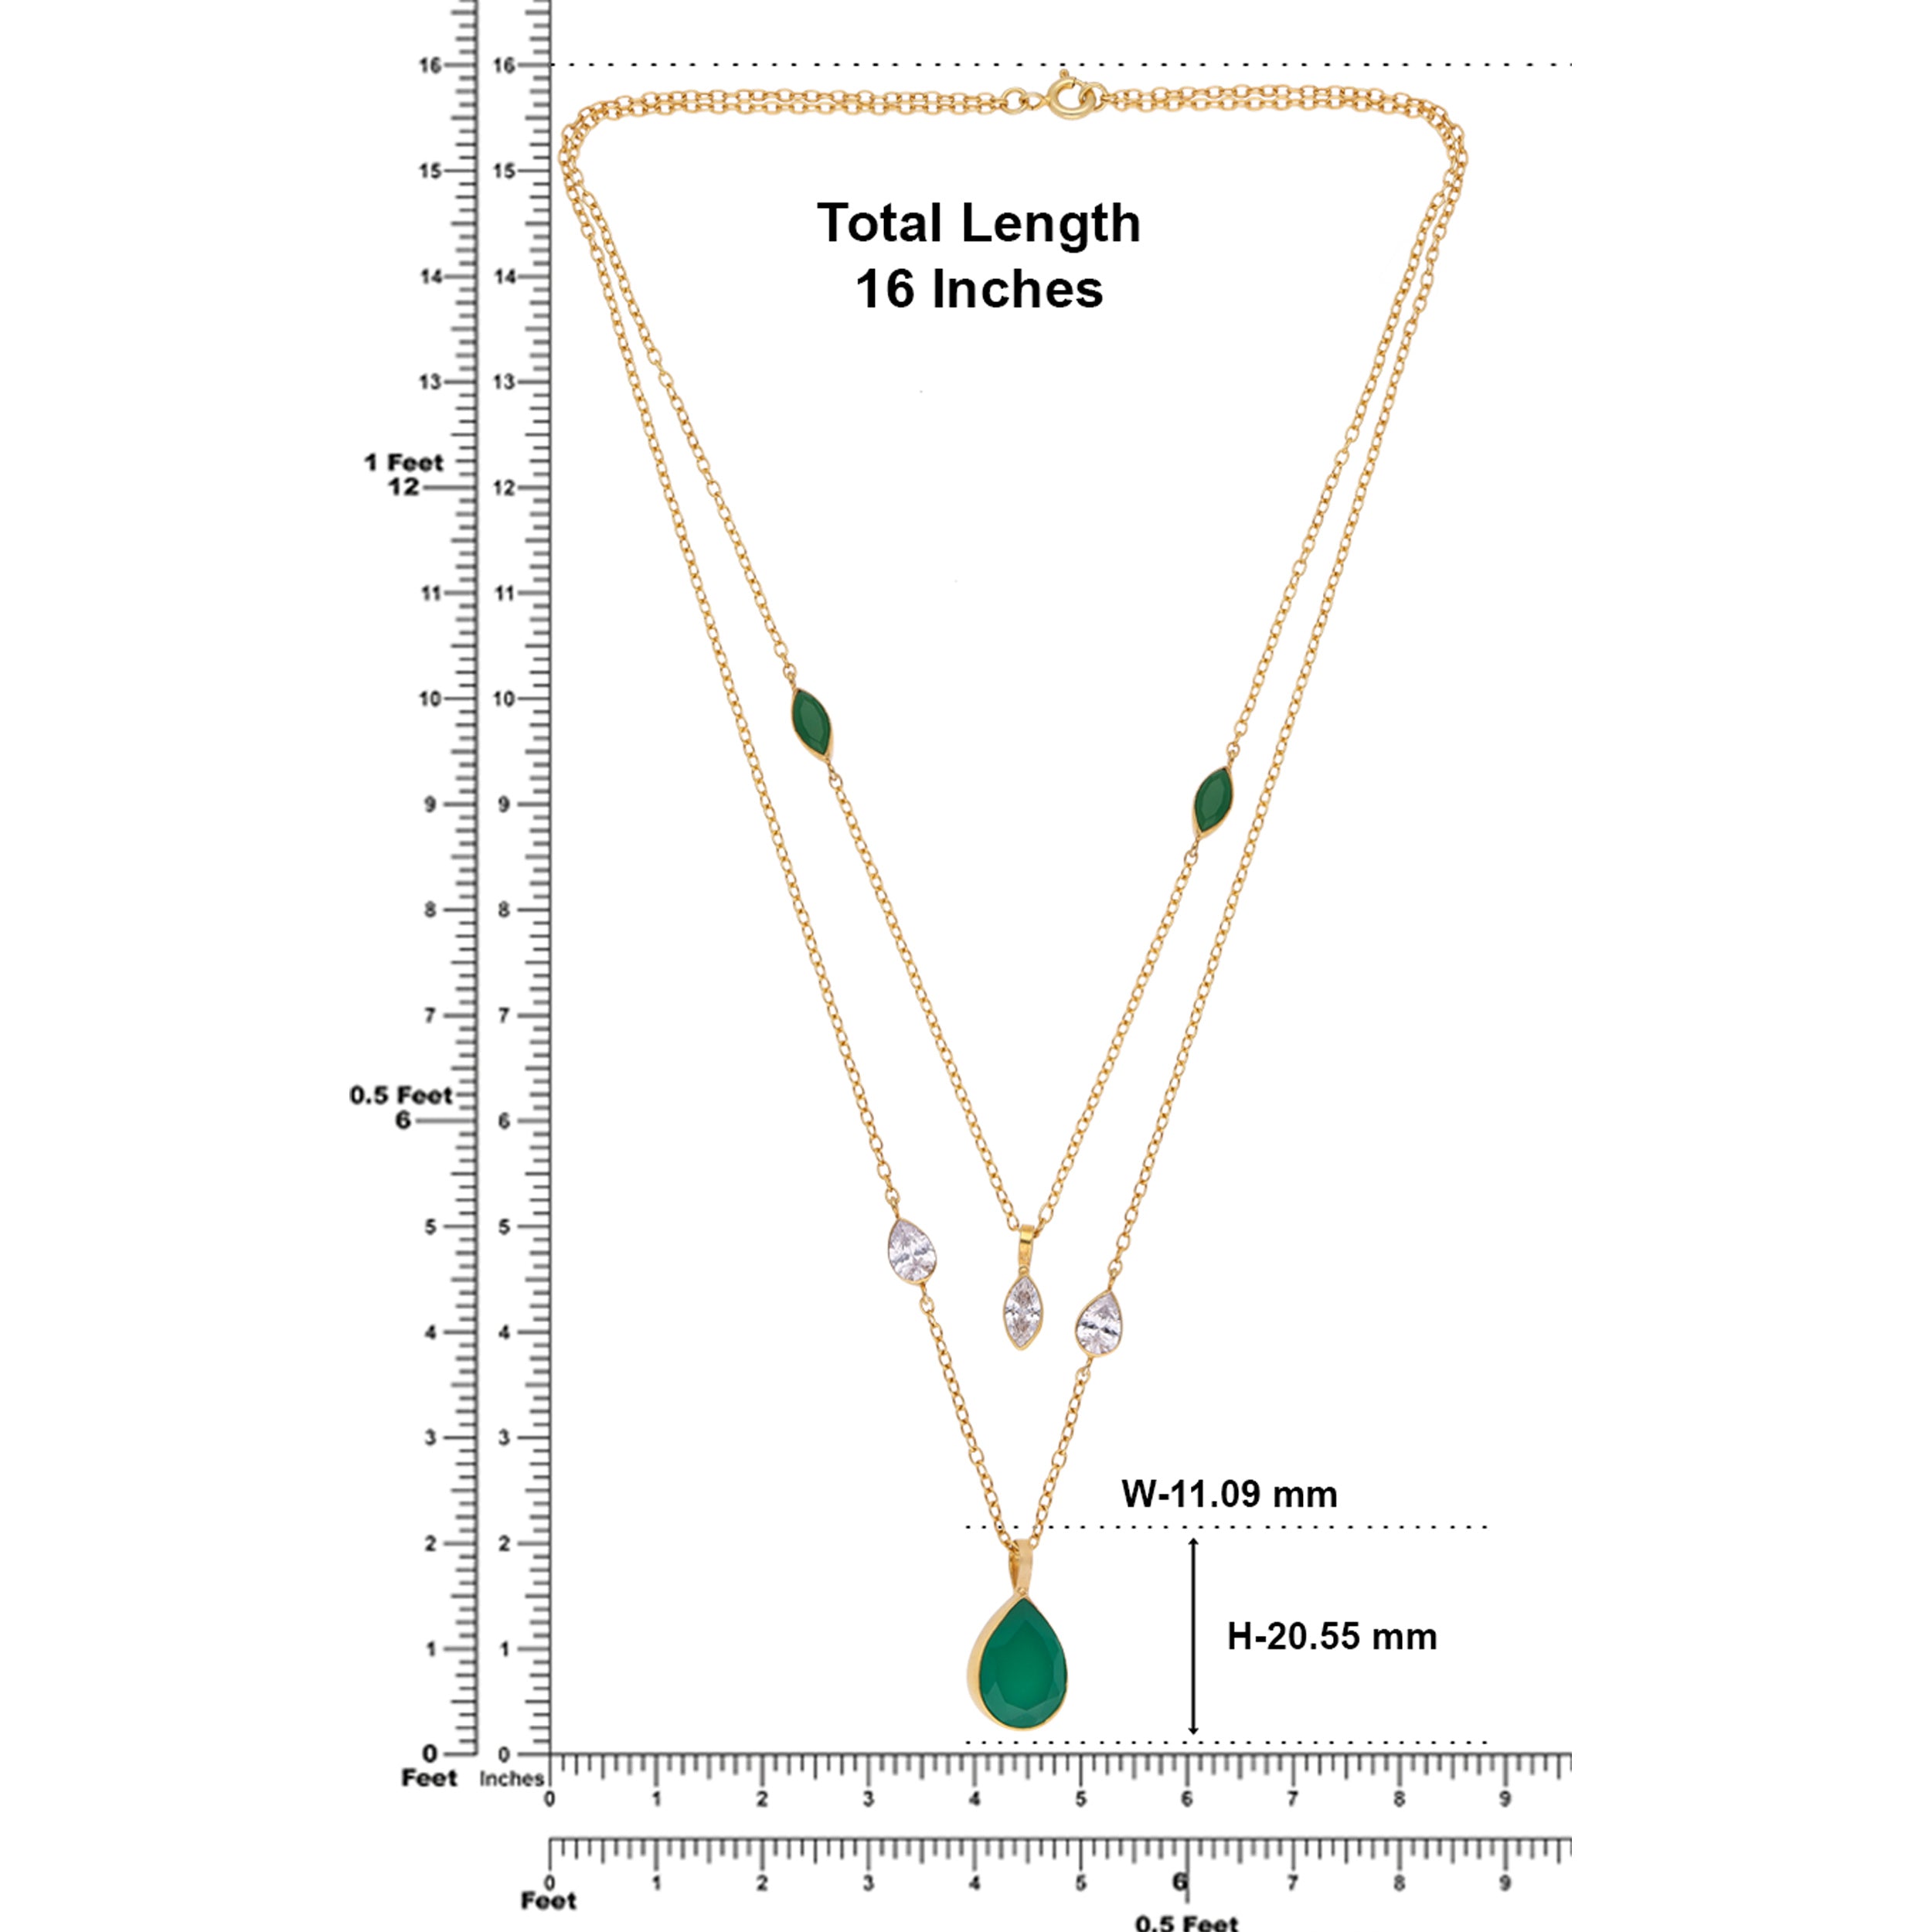 Dual-Strand Gold Necklace Emerald Silver Pendant | SKU: 0019586359, 0019586373, 0019586298, 0019586311, 0019586328, 0019586335, 0019586342, 0019586304, 0019586366, 0019586380